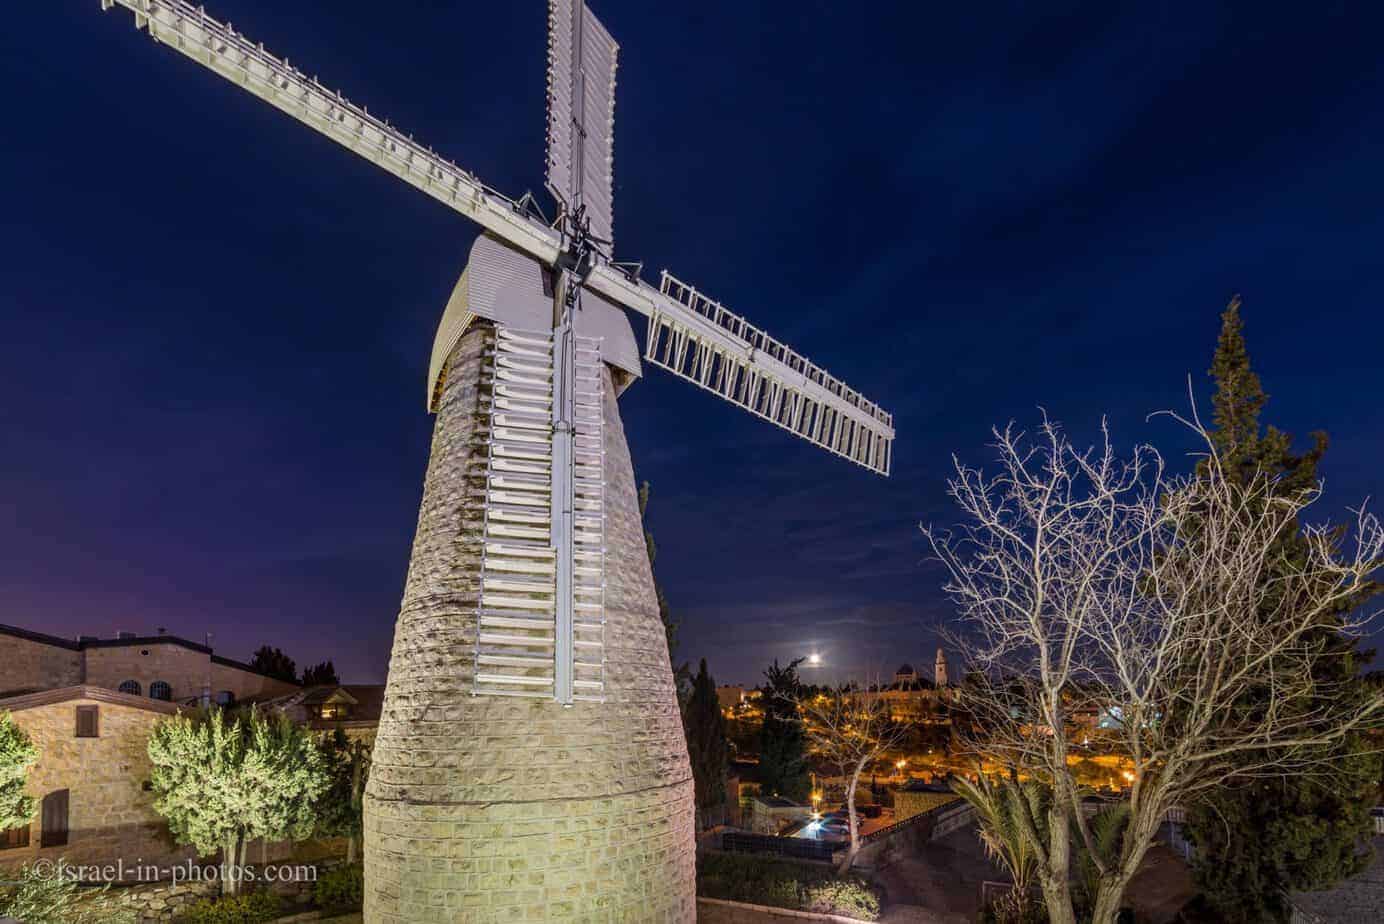 The Montefiore Windmill